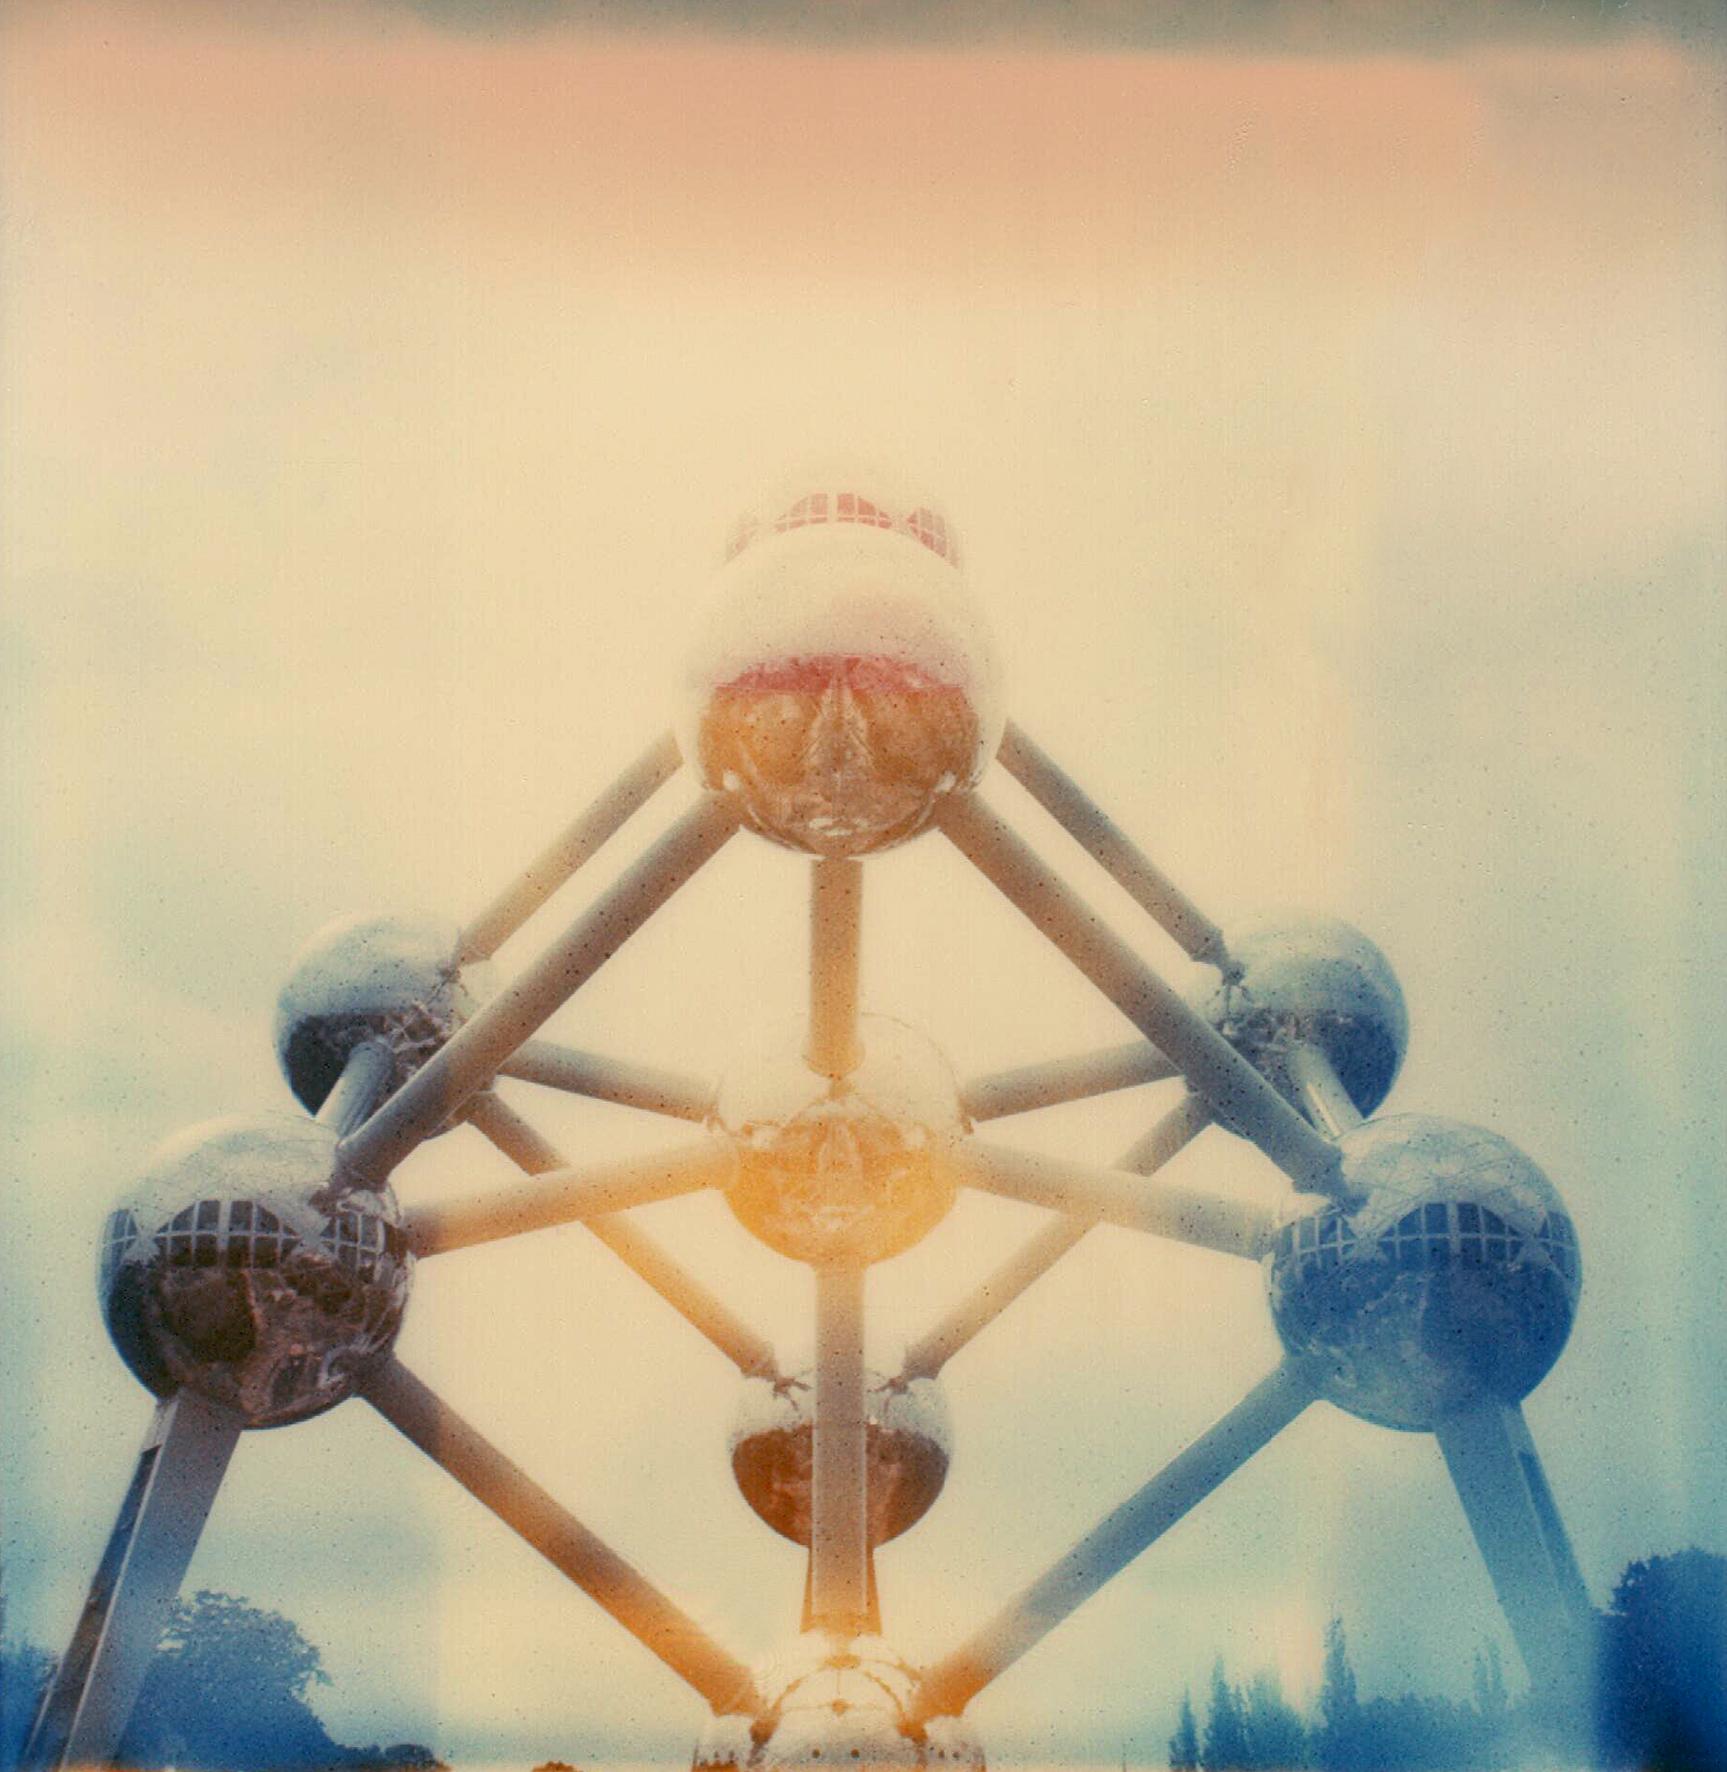 Atomium #06 [With greetings from] - Polaroid, Landscape, Belgium, Color